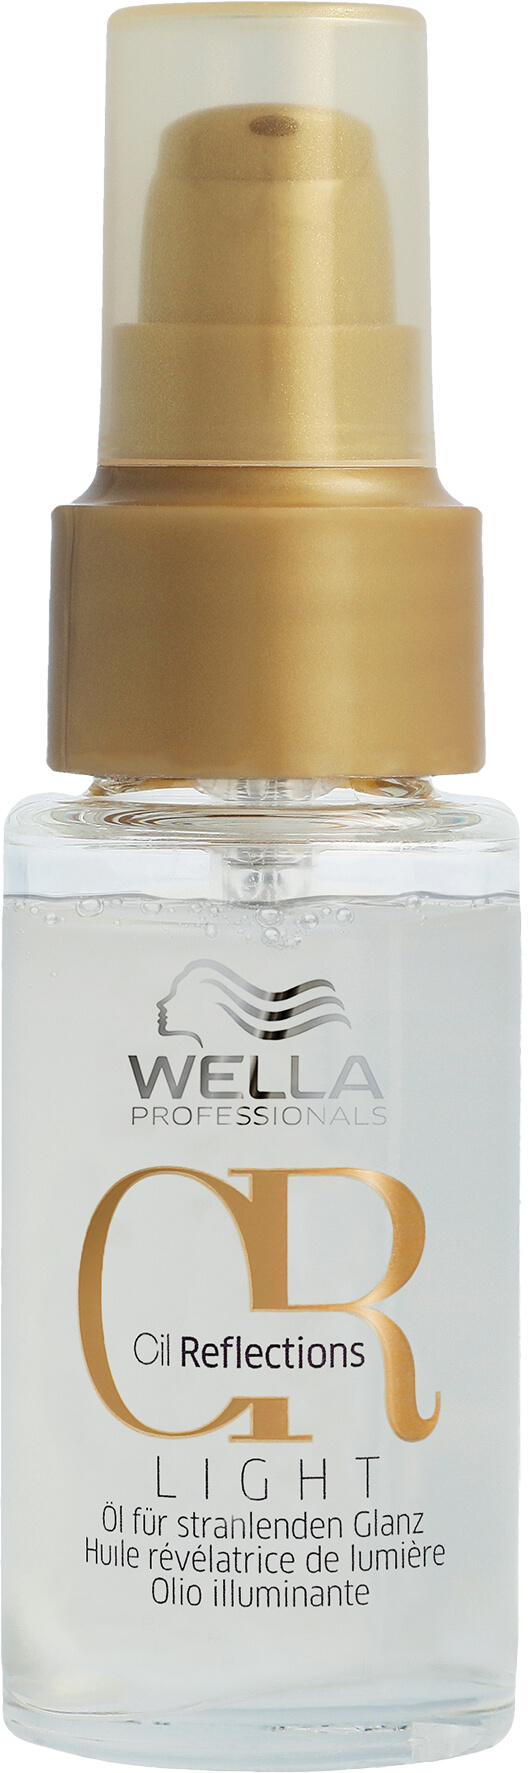 Wella Oil Reflections Light Oil (Haaröl für feines Haar)